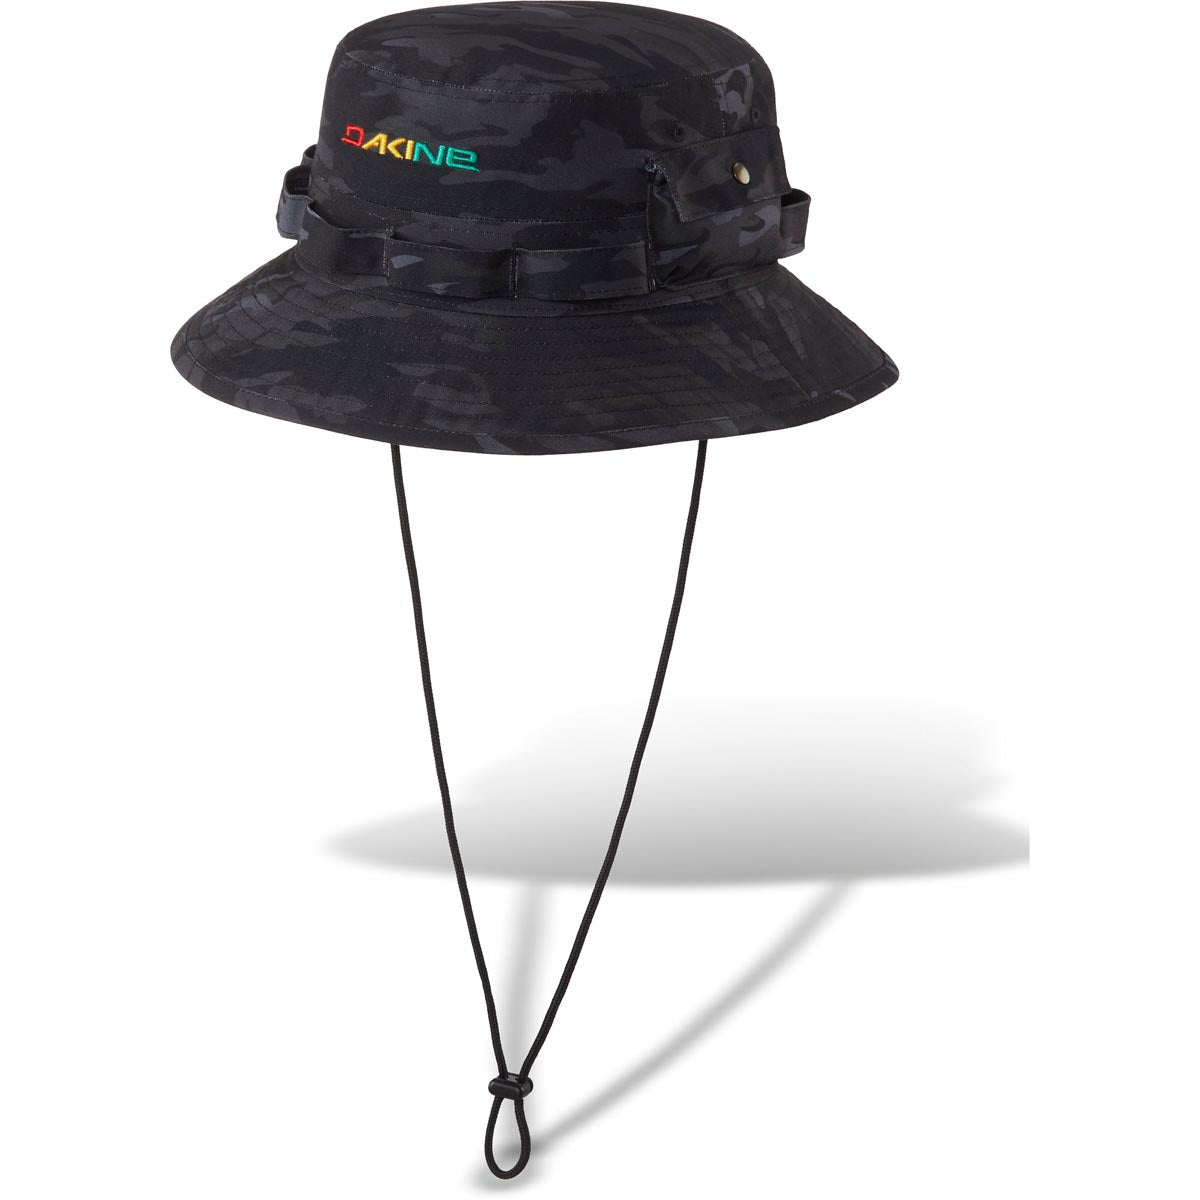 Dakine Breaker Boonie Hat - Black Vintage Camo image 1